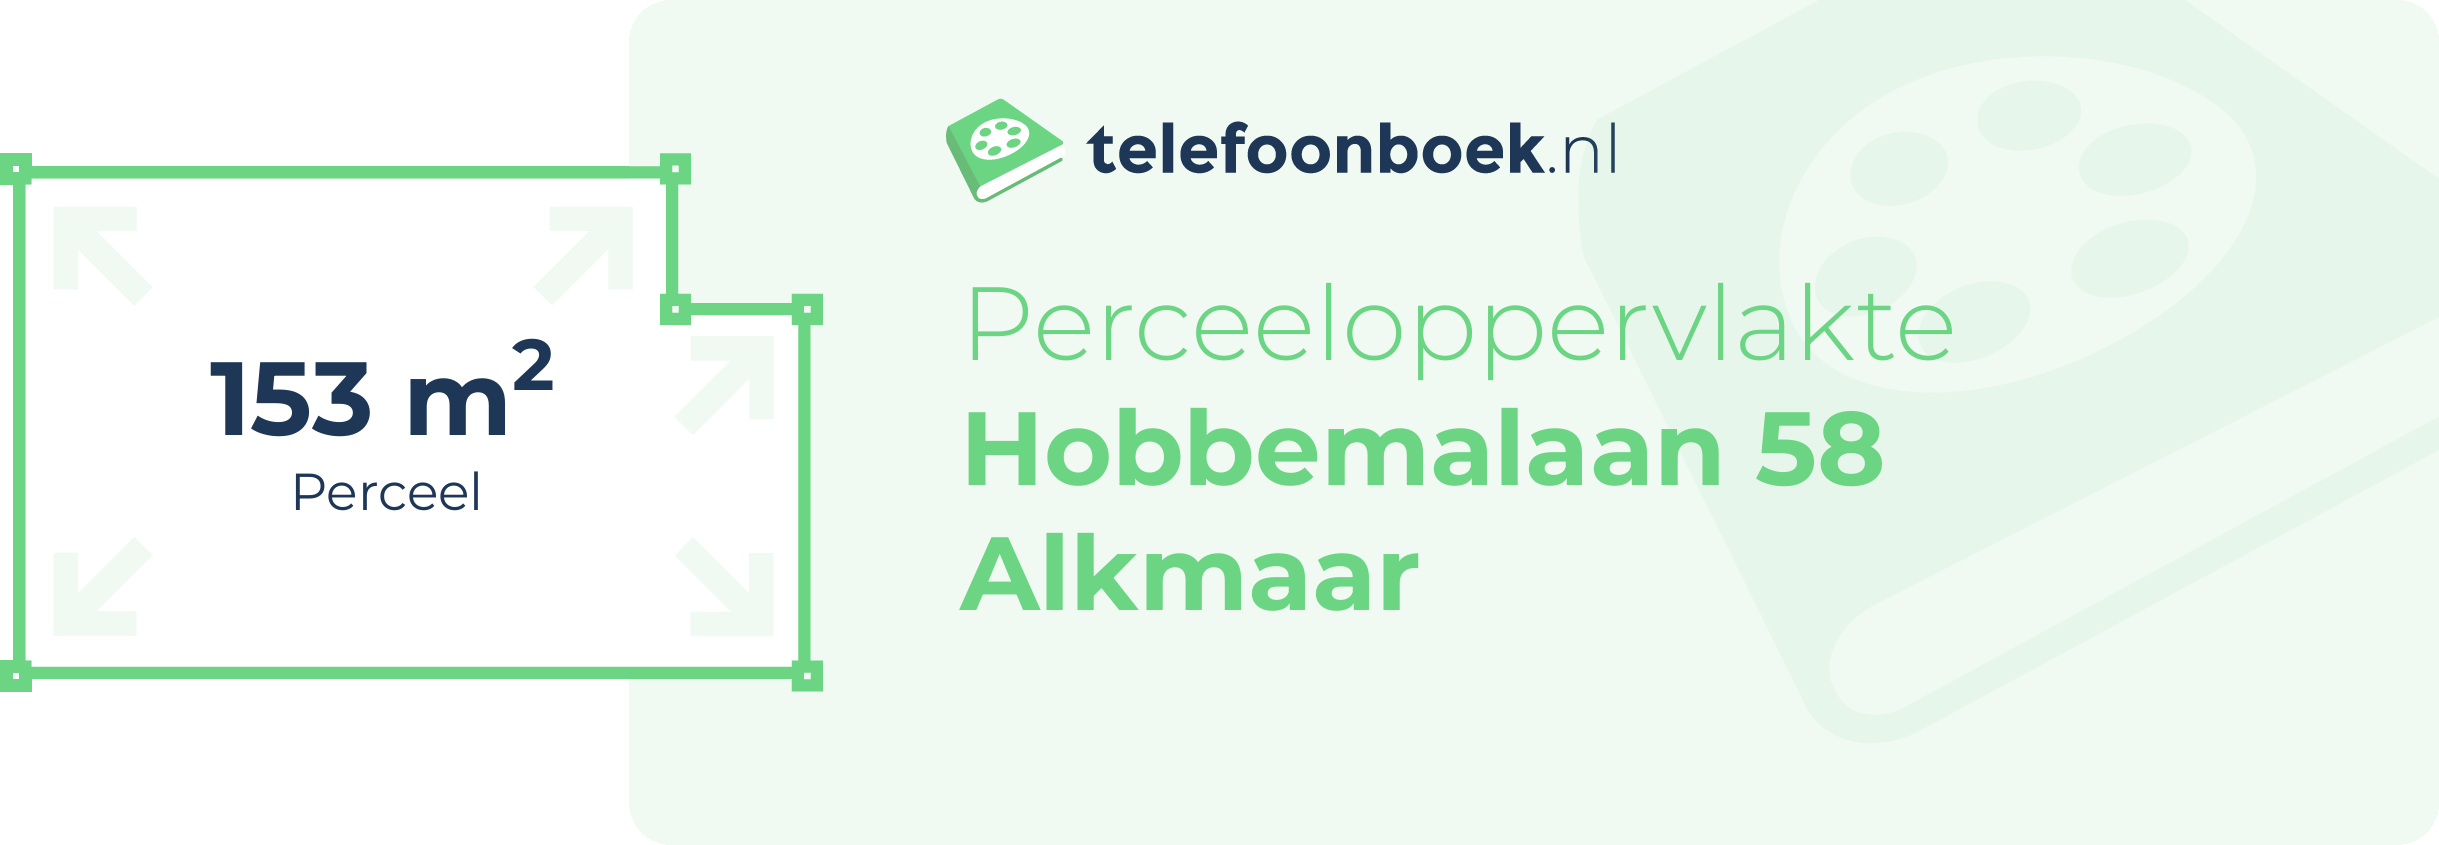 Perceeloppervlakte Hobbemalaan 58 Alkmaar